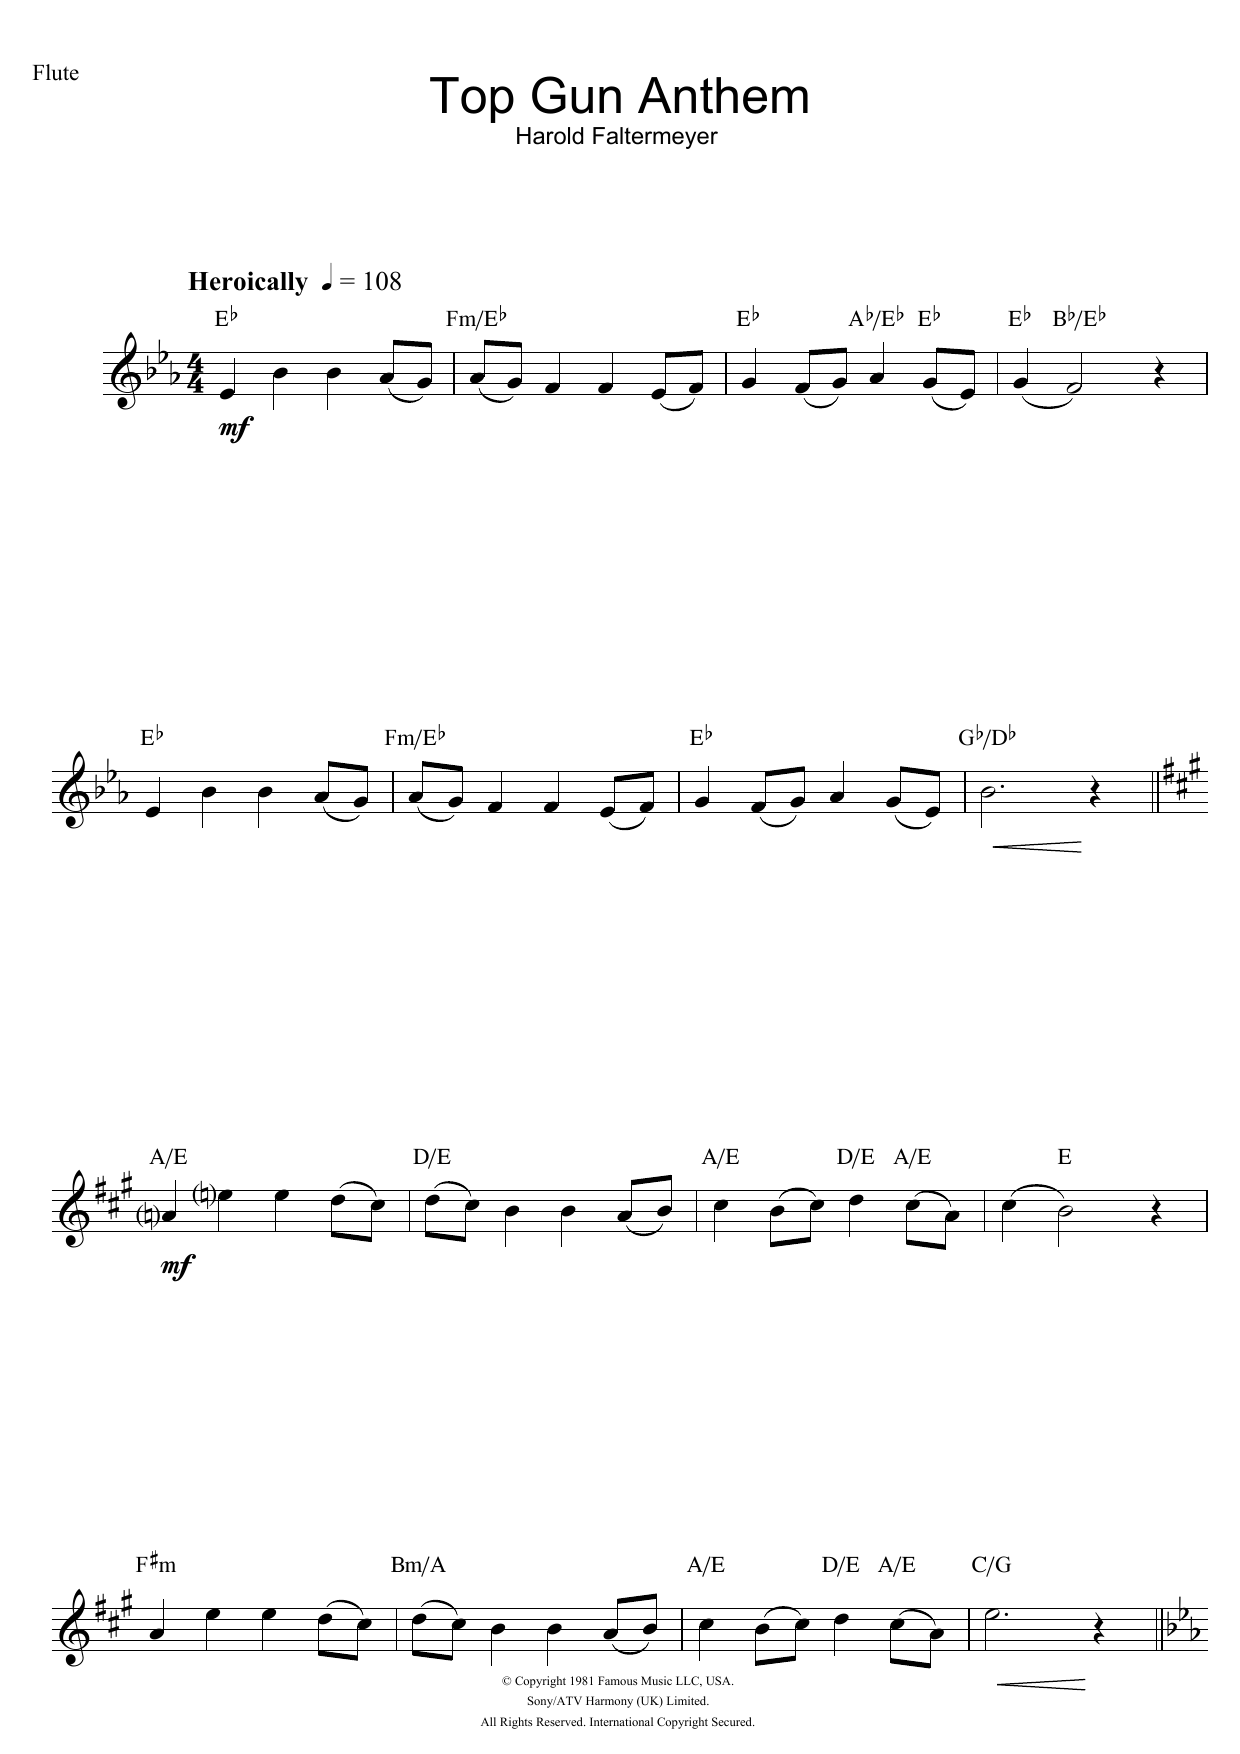 Top Gun Anthem - Harold Faltermeyer (with sheets) 